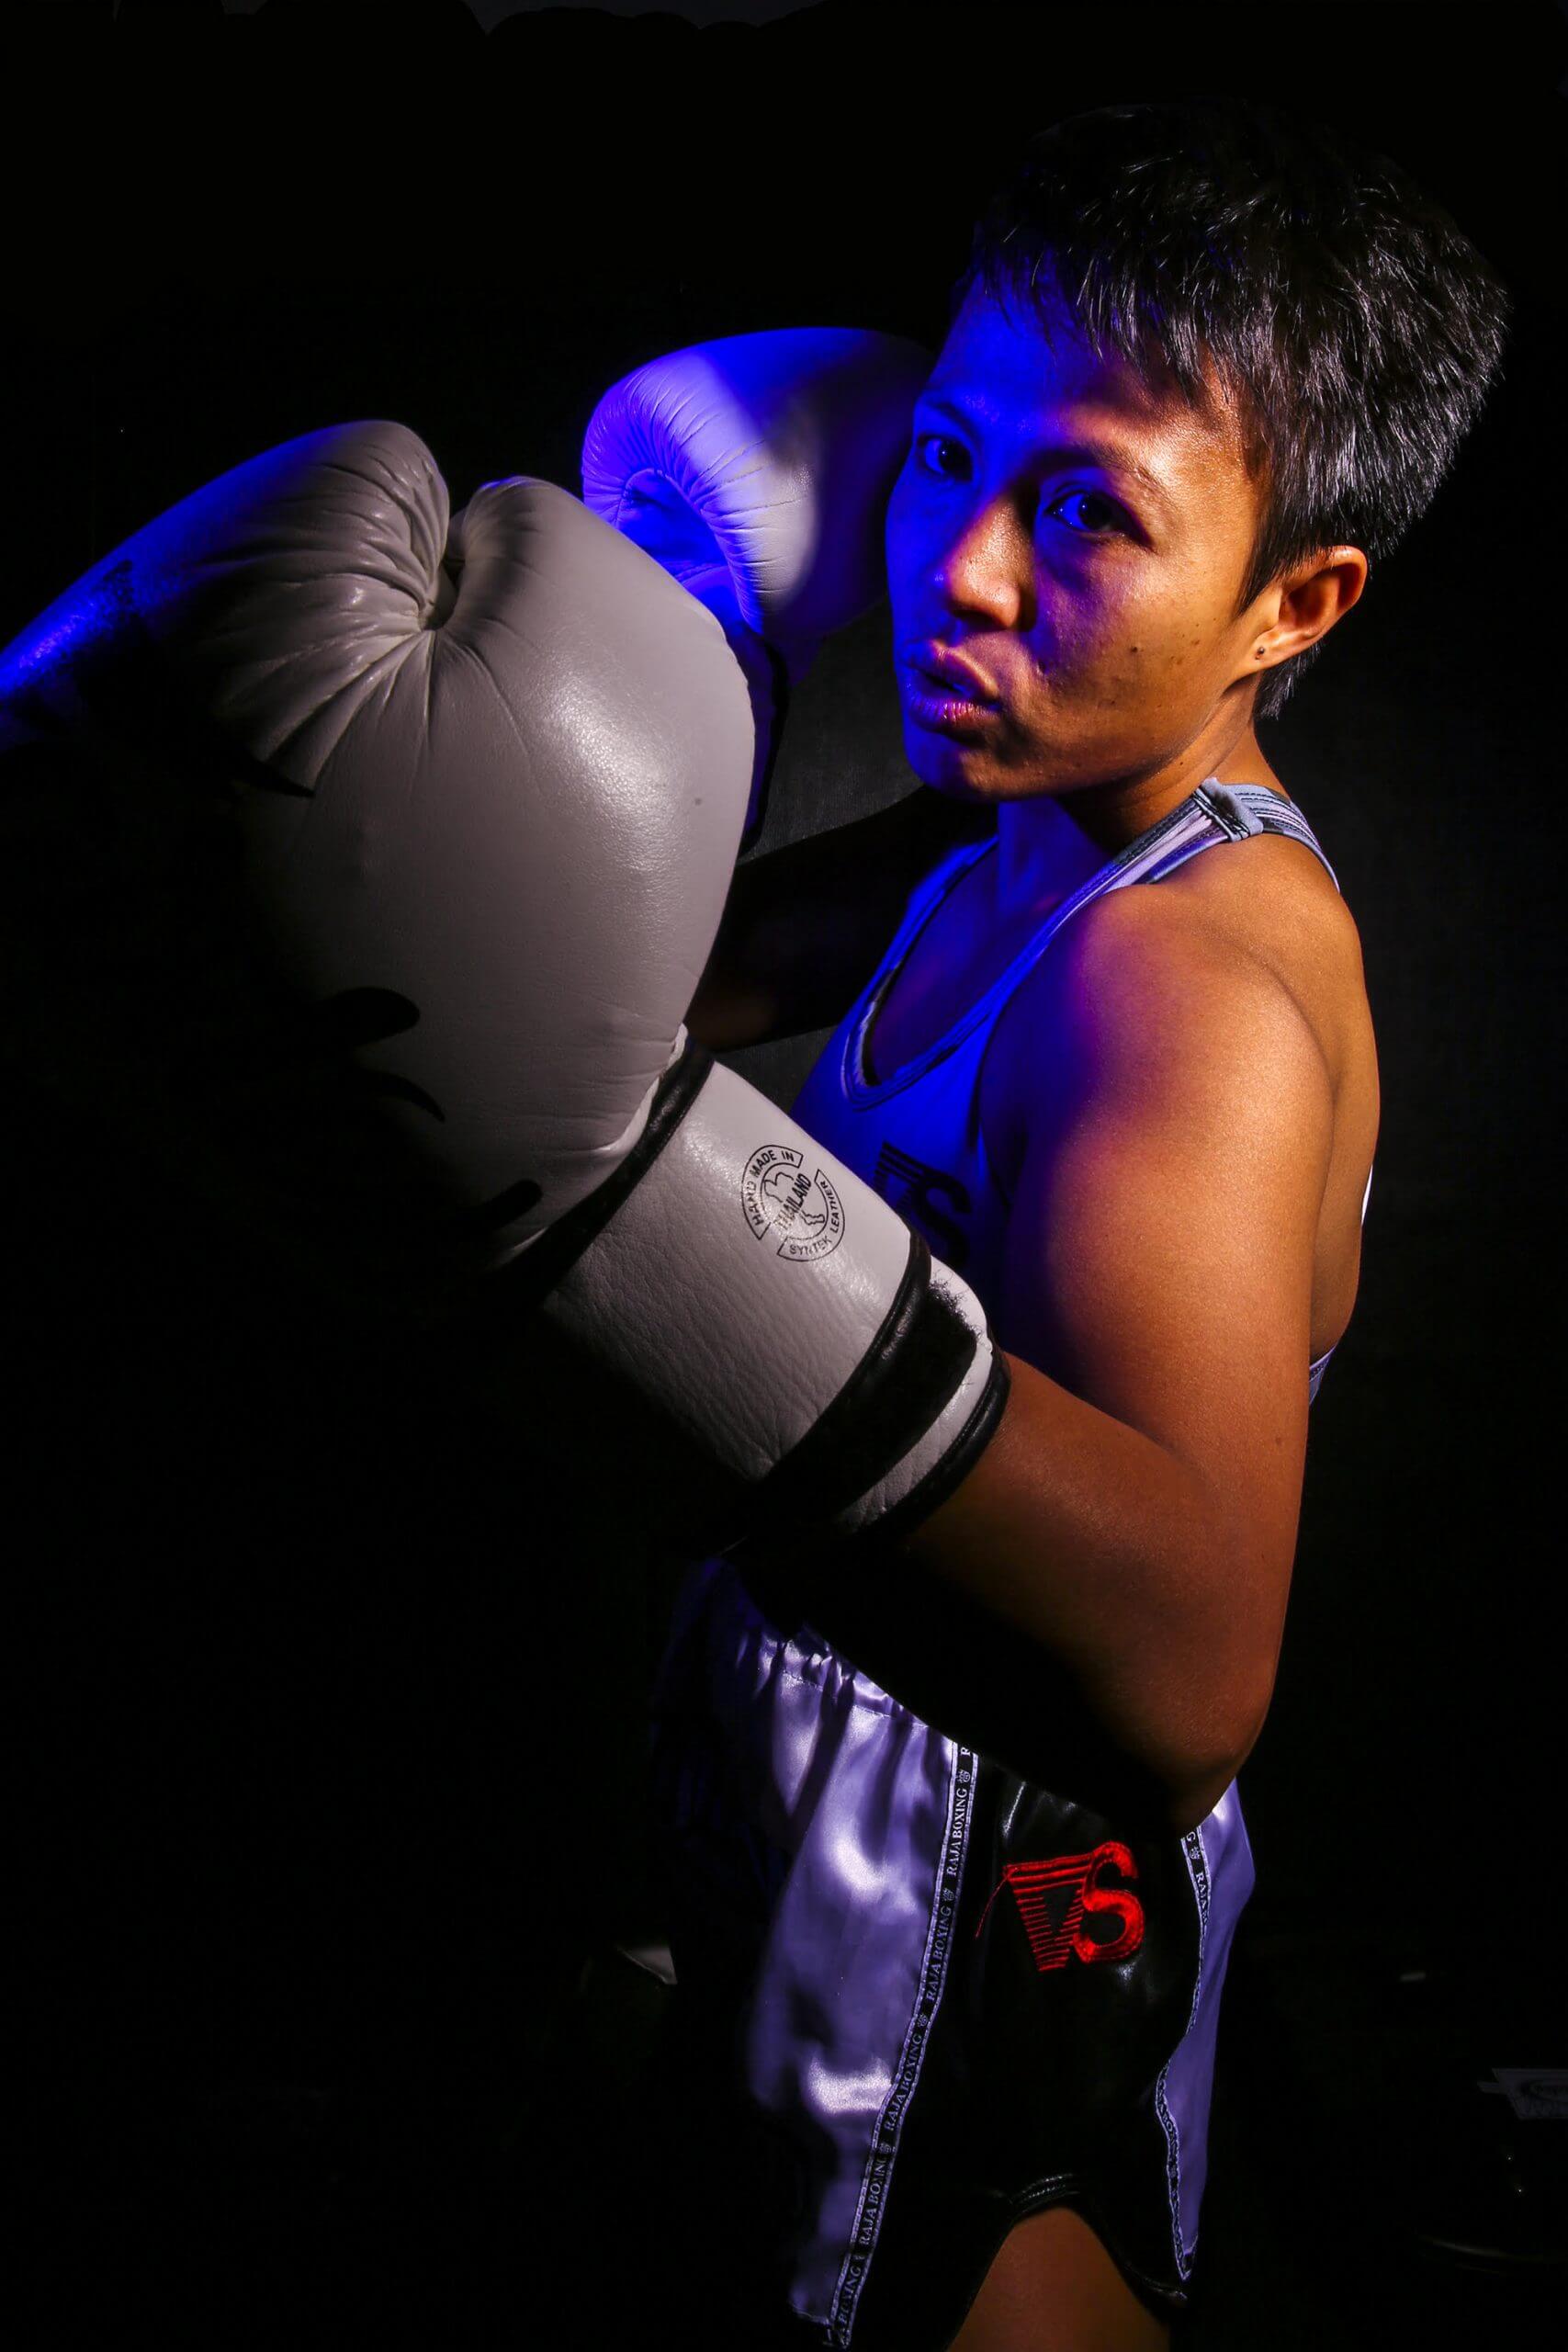 thai ngan le woodenman muay thai fairtex throwing punch with gray boxing glove